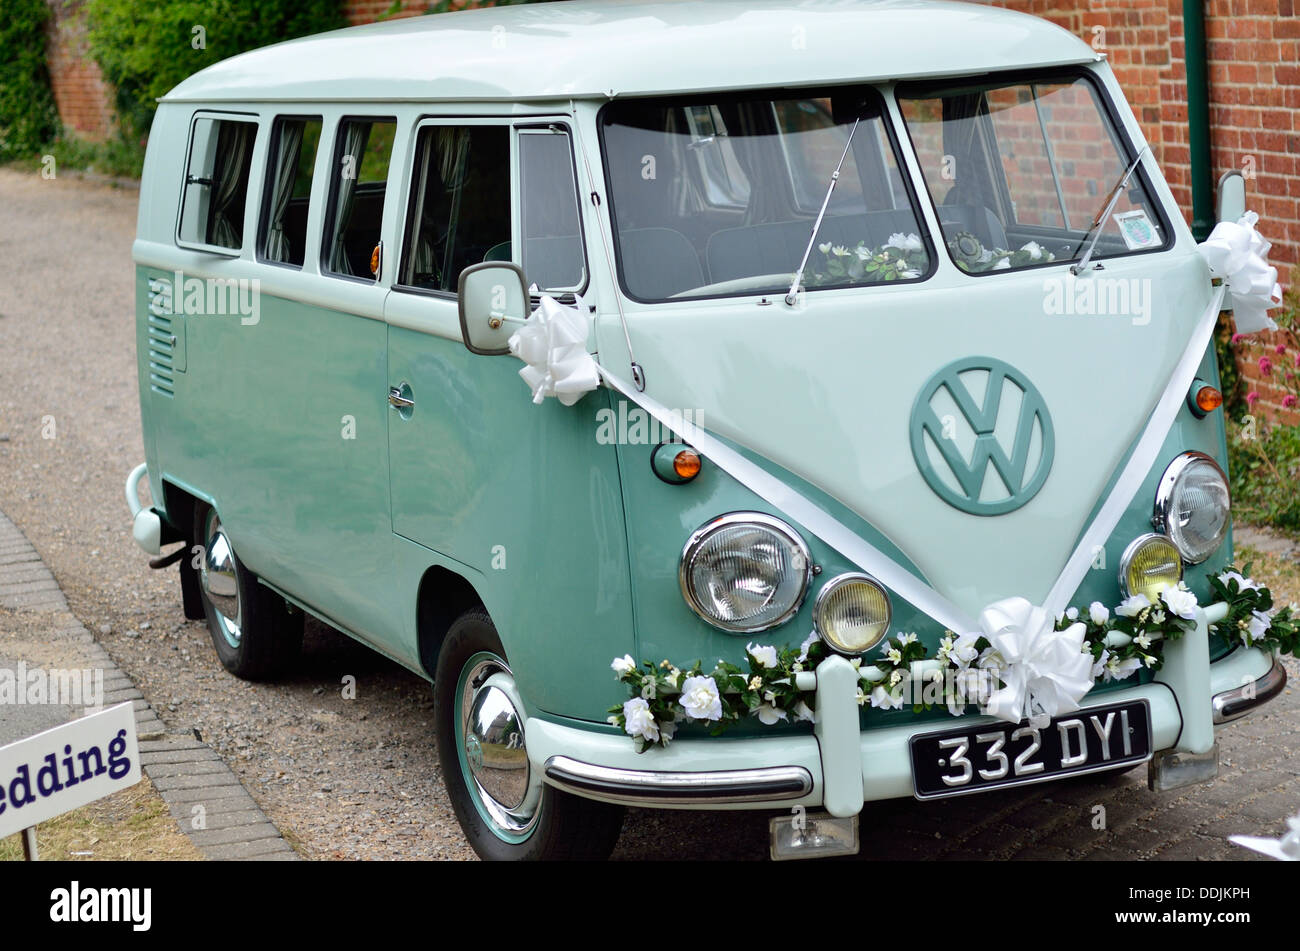 Vw camper van wedding car hi-res stock photography and images - Alamy